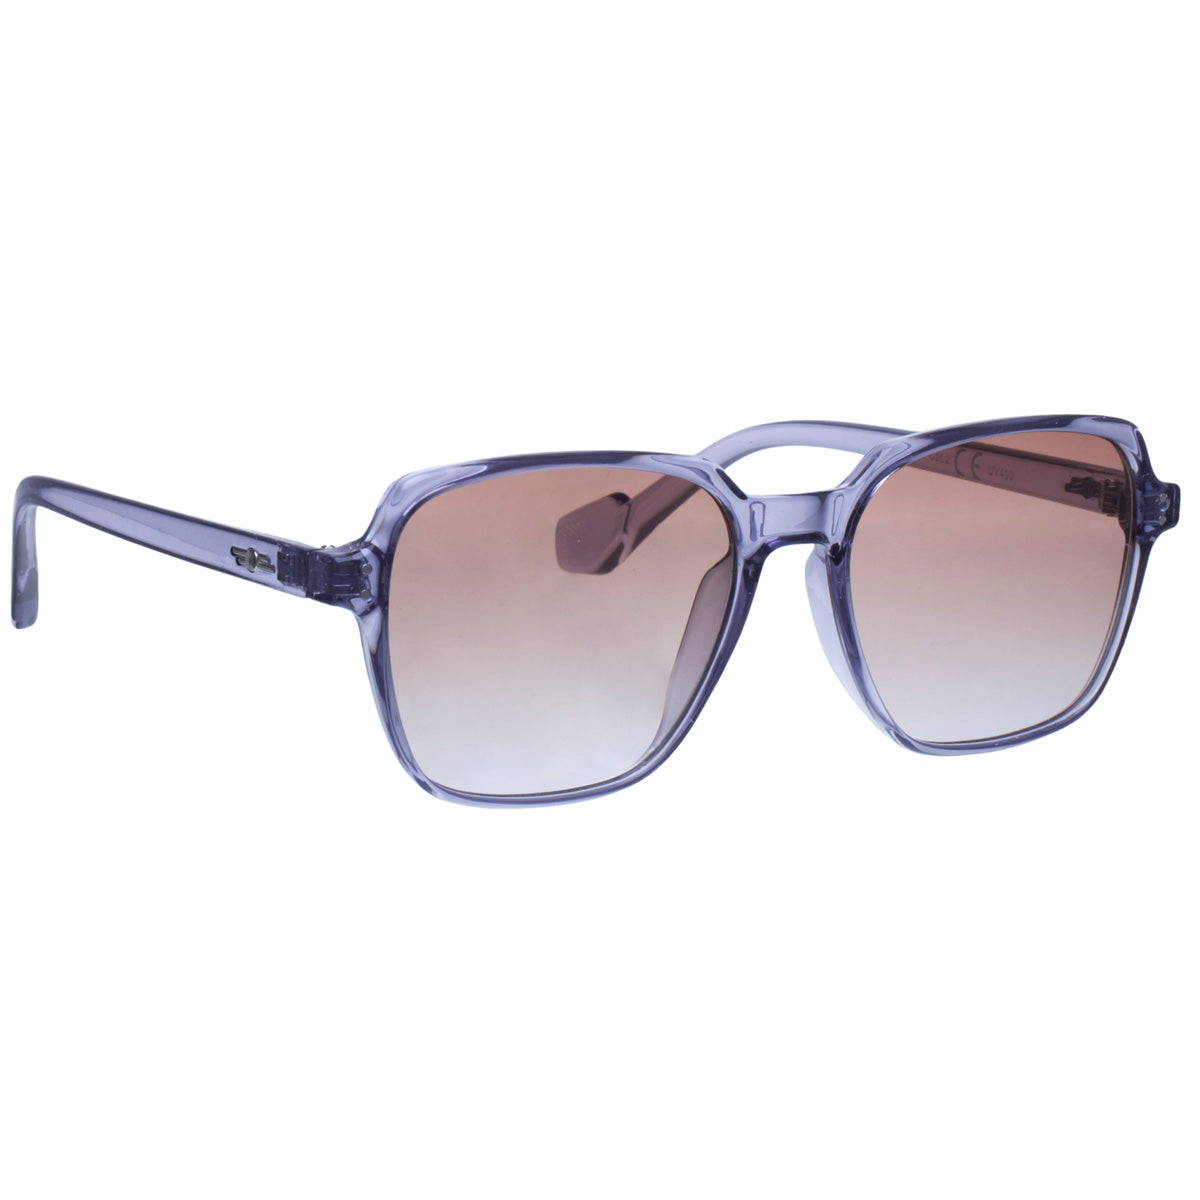 Angular square sunglasses